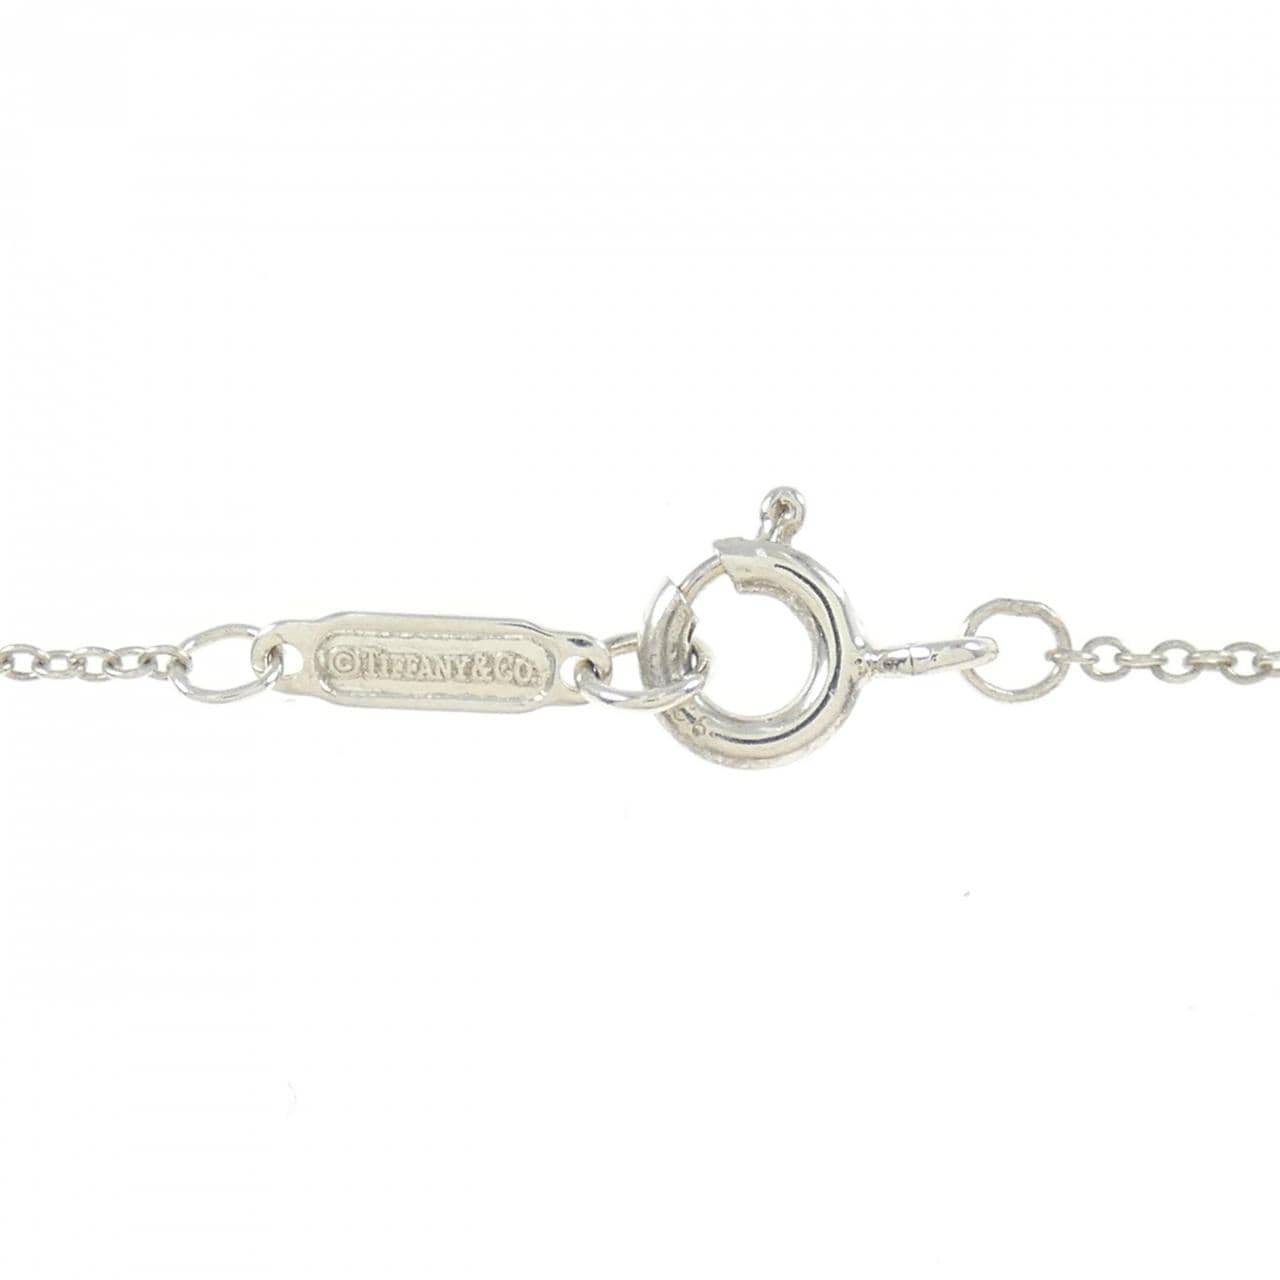 TIFFANY 1837 round lock necklace